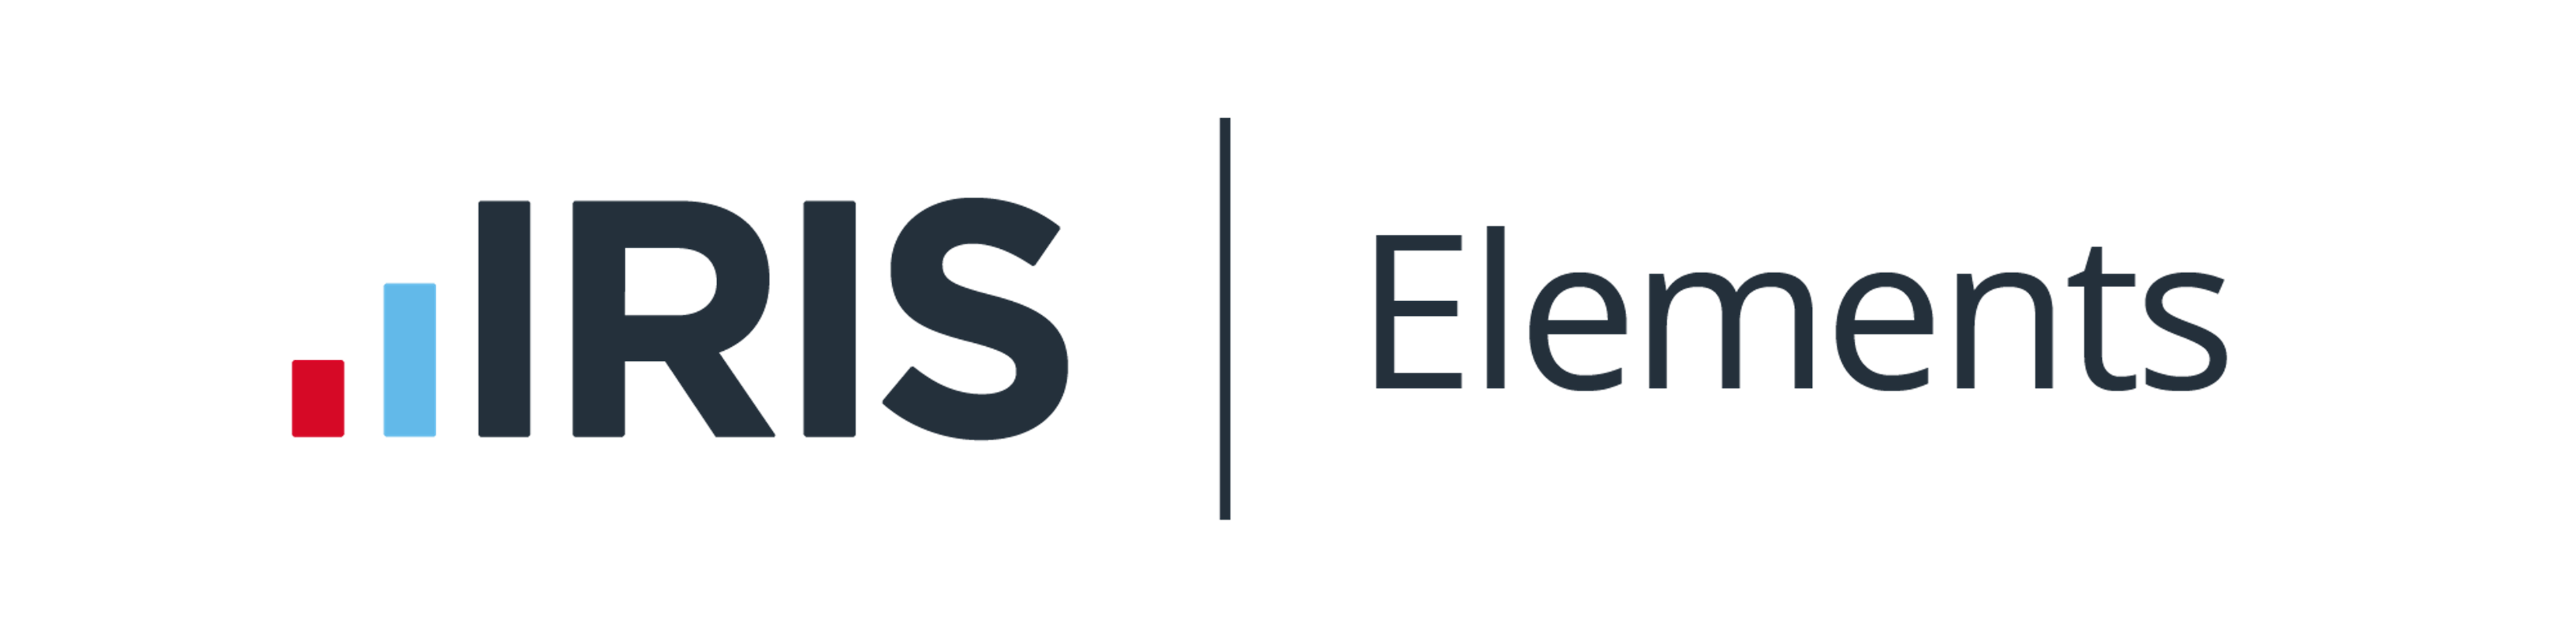 IRIS Elements  logo